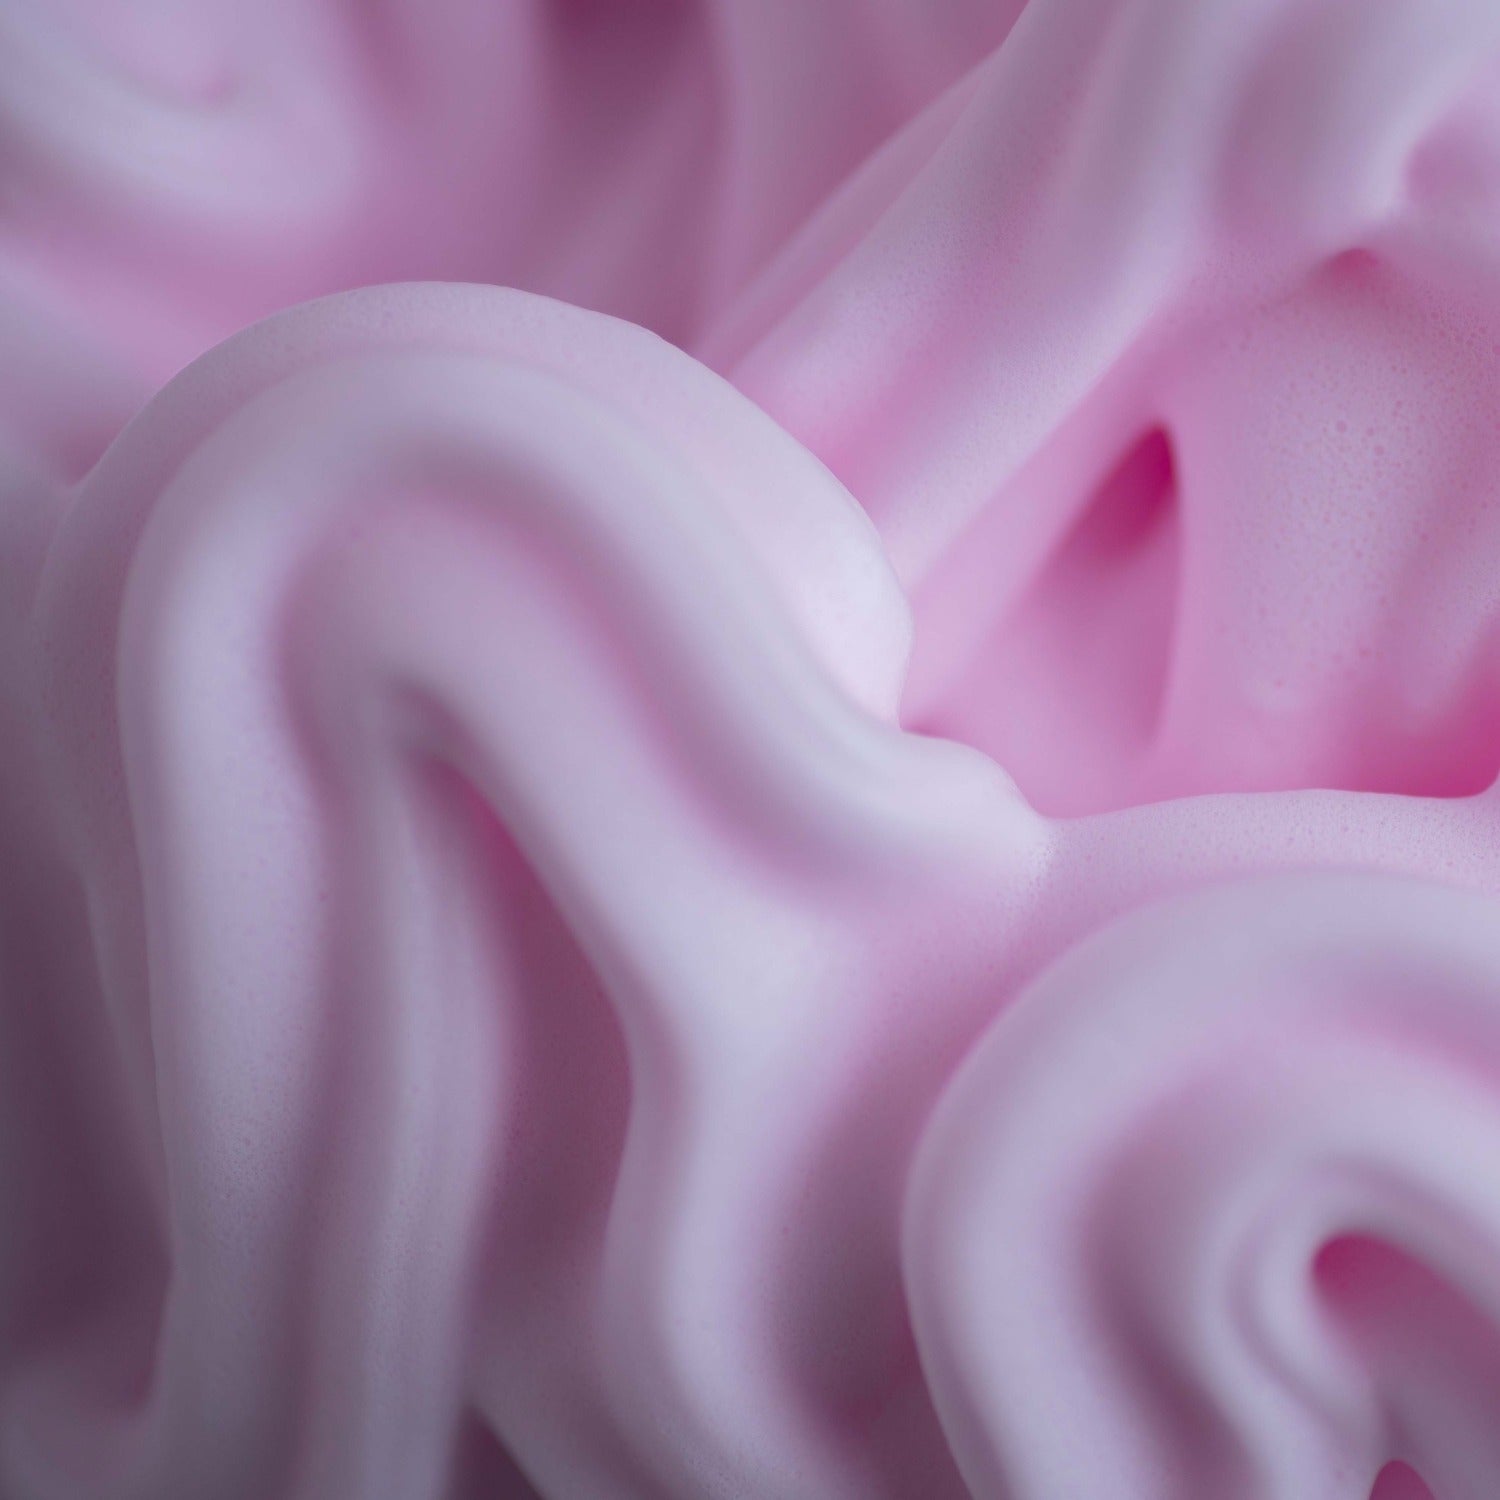 Close-up of Mecré moisturizing body wash with cherry scent, showcasing dense, pinkish foam.